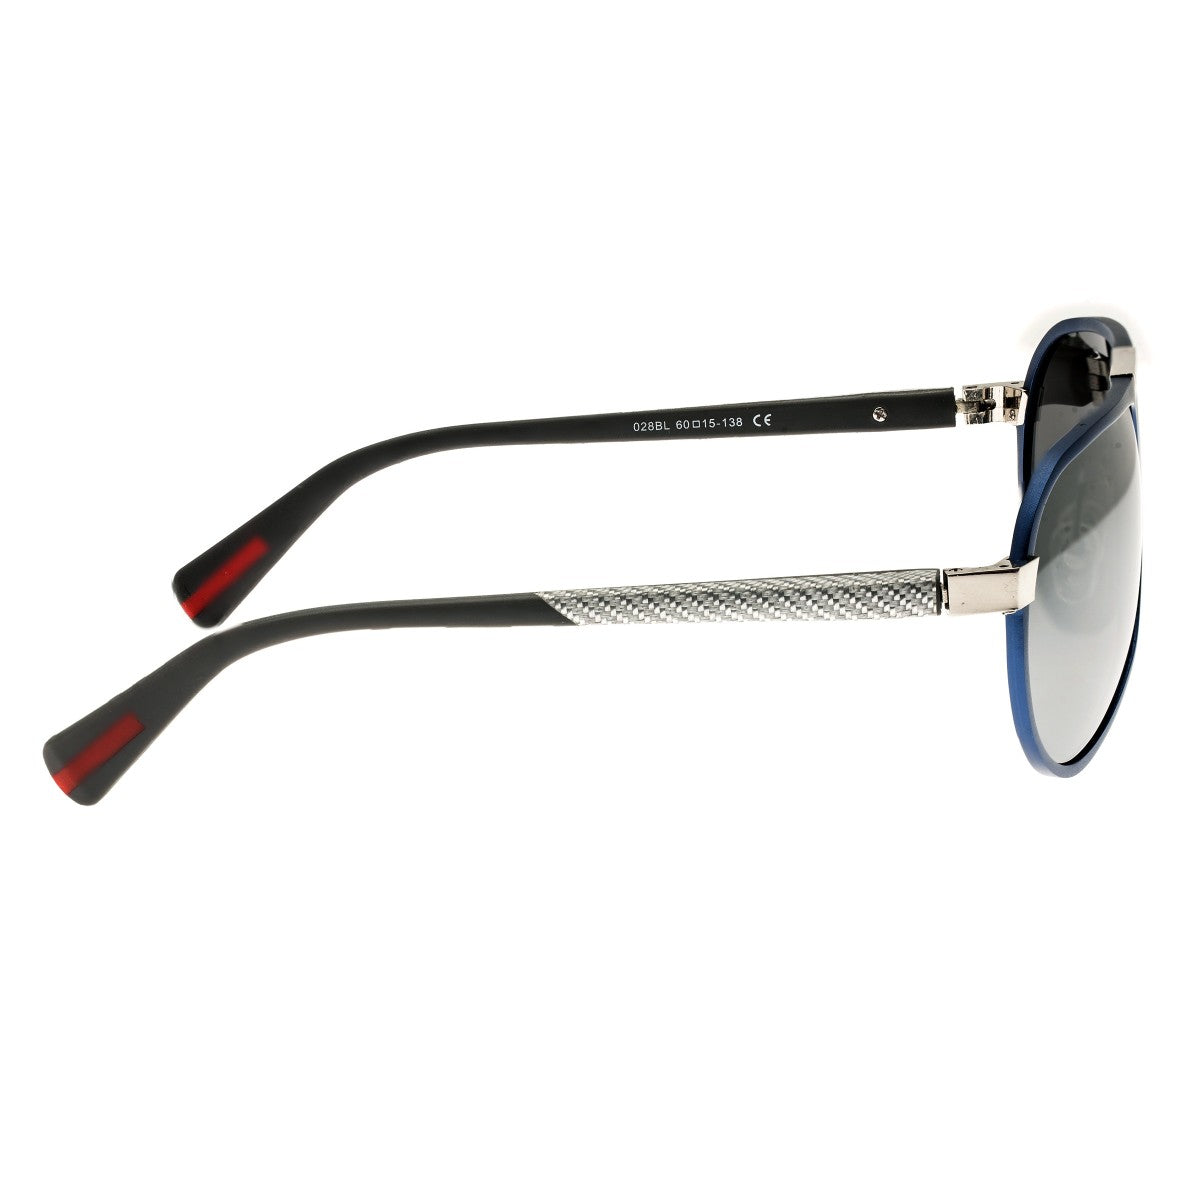 Breed Octans Titanium Polarized Sunglasses - Blue/Black - BSG028BL